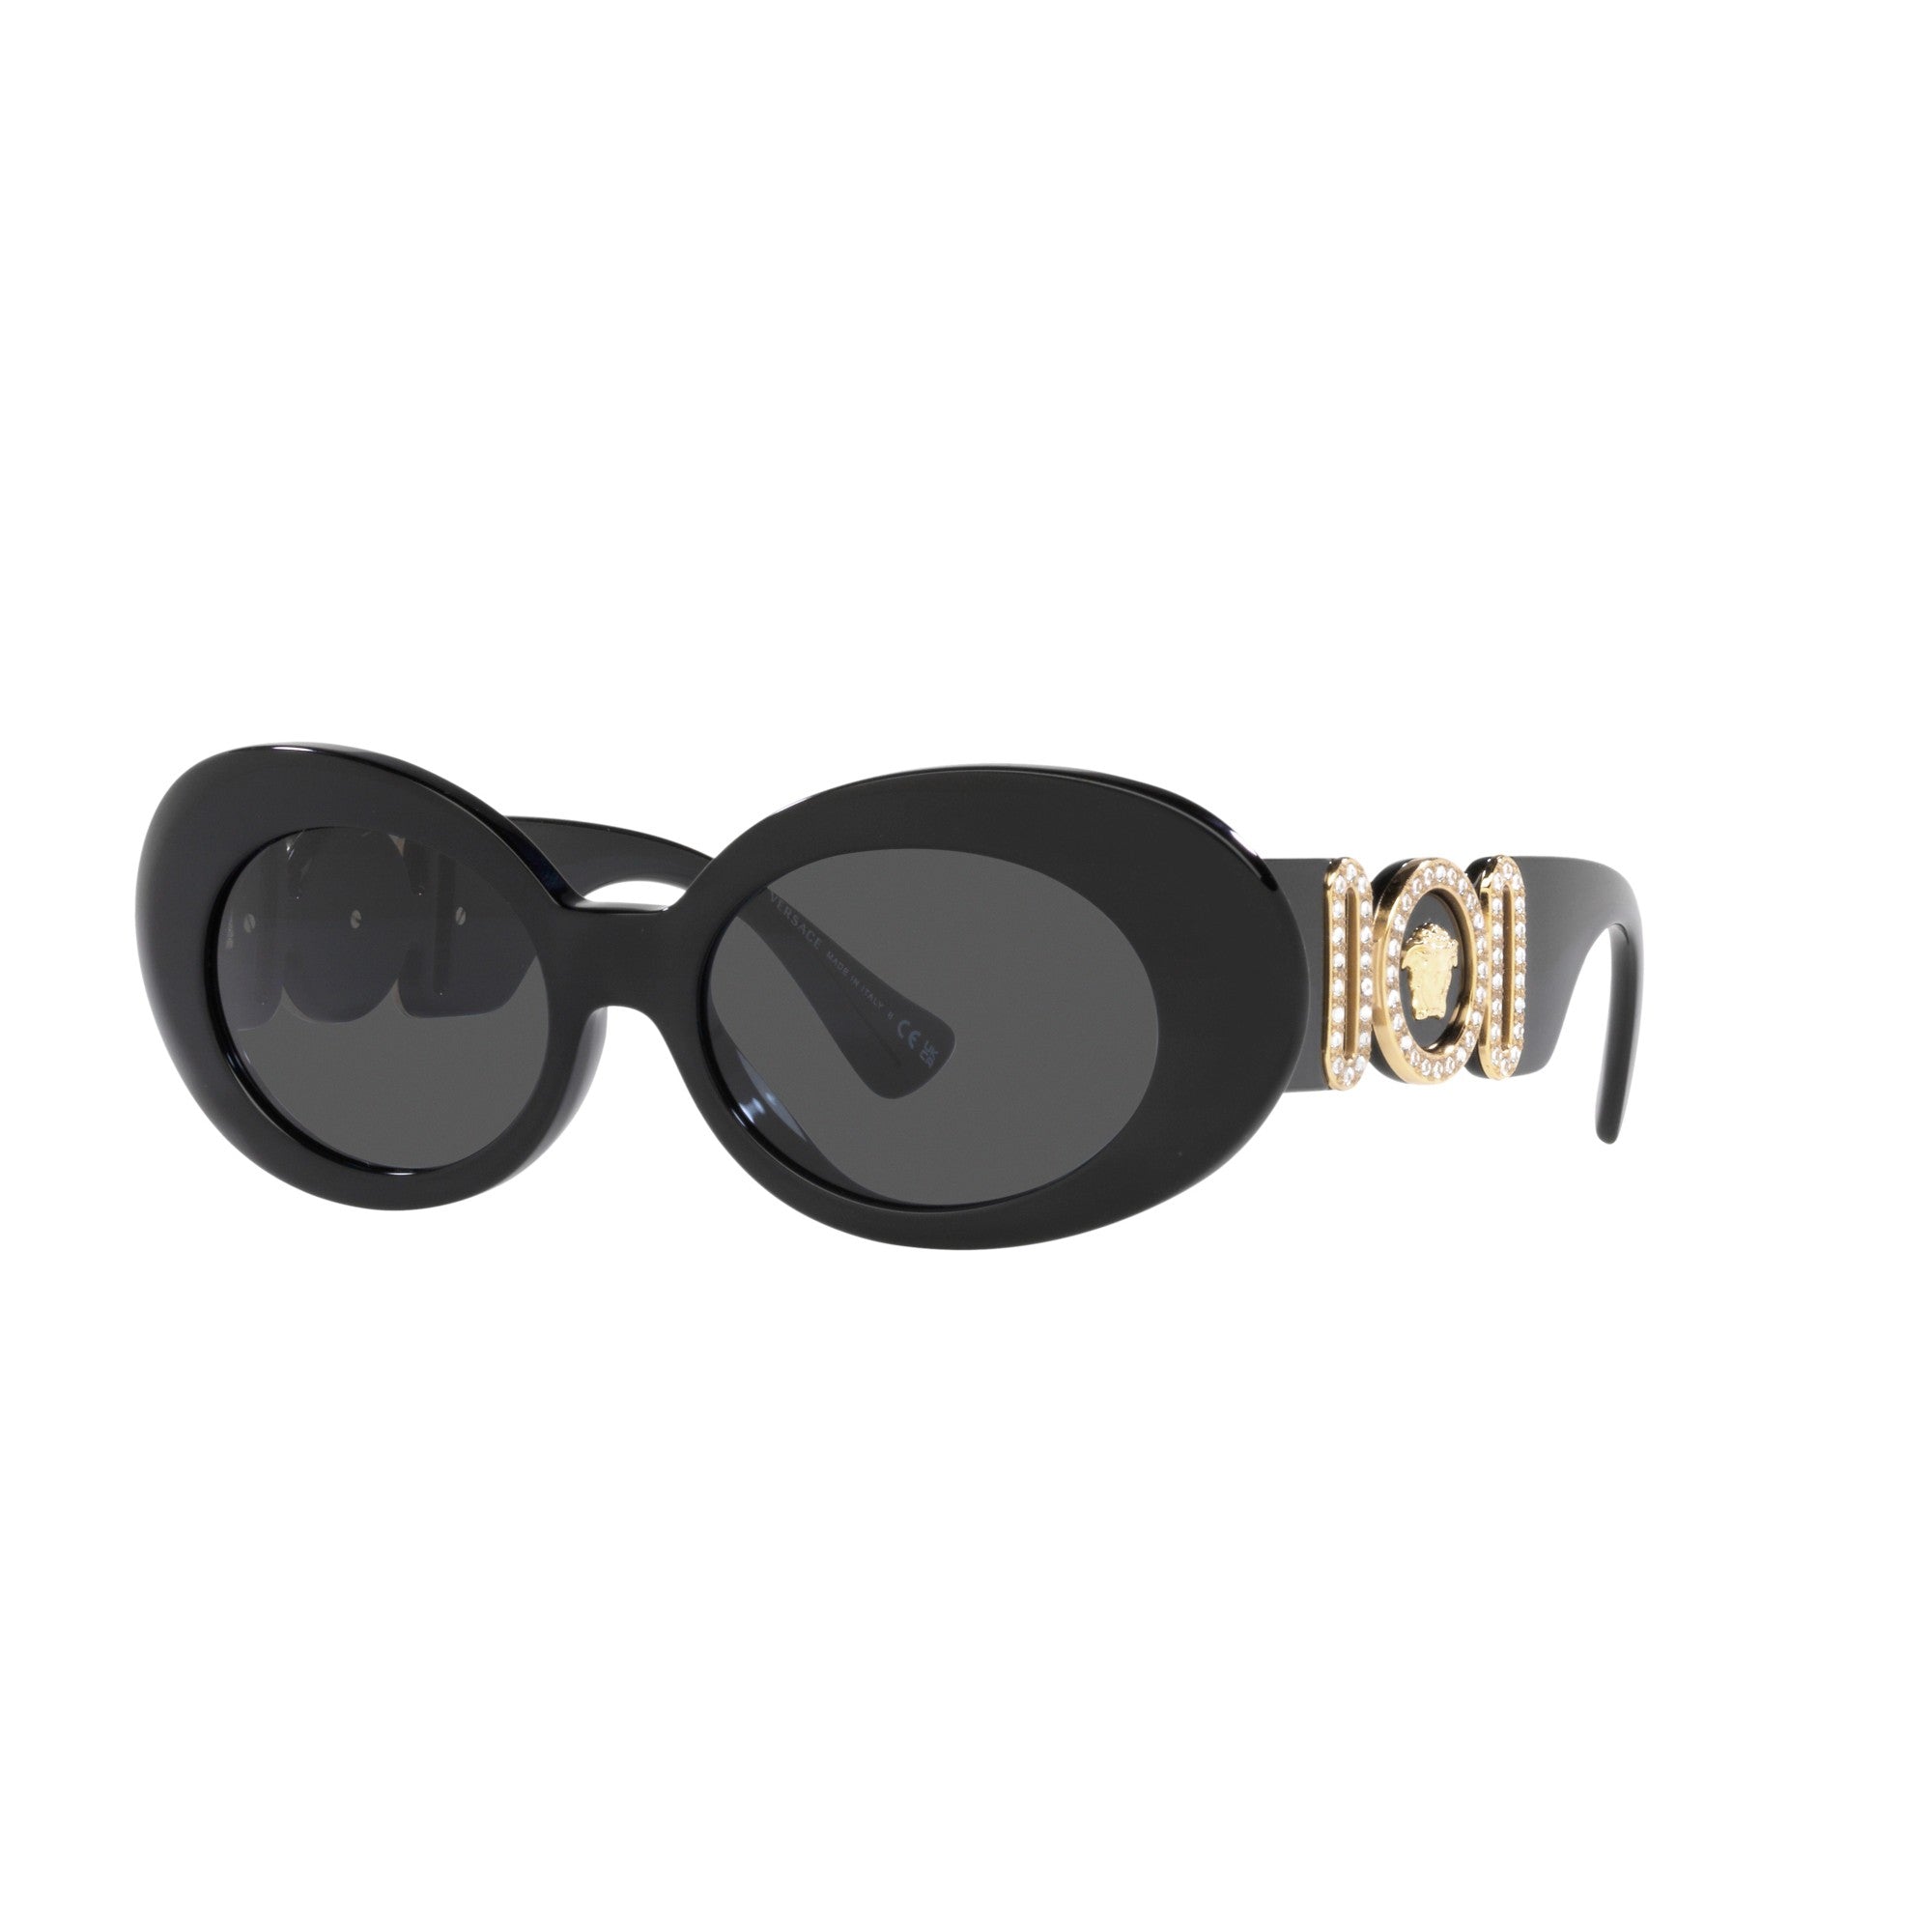 Versace Women's Black Sunglasses with Dark Gray Solid Color Lenses VE_4426BU_GB1/87_54mm